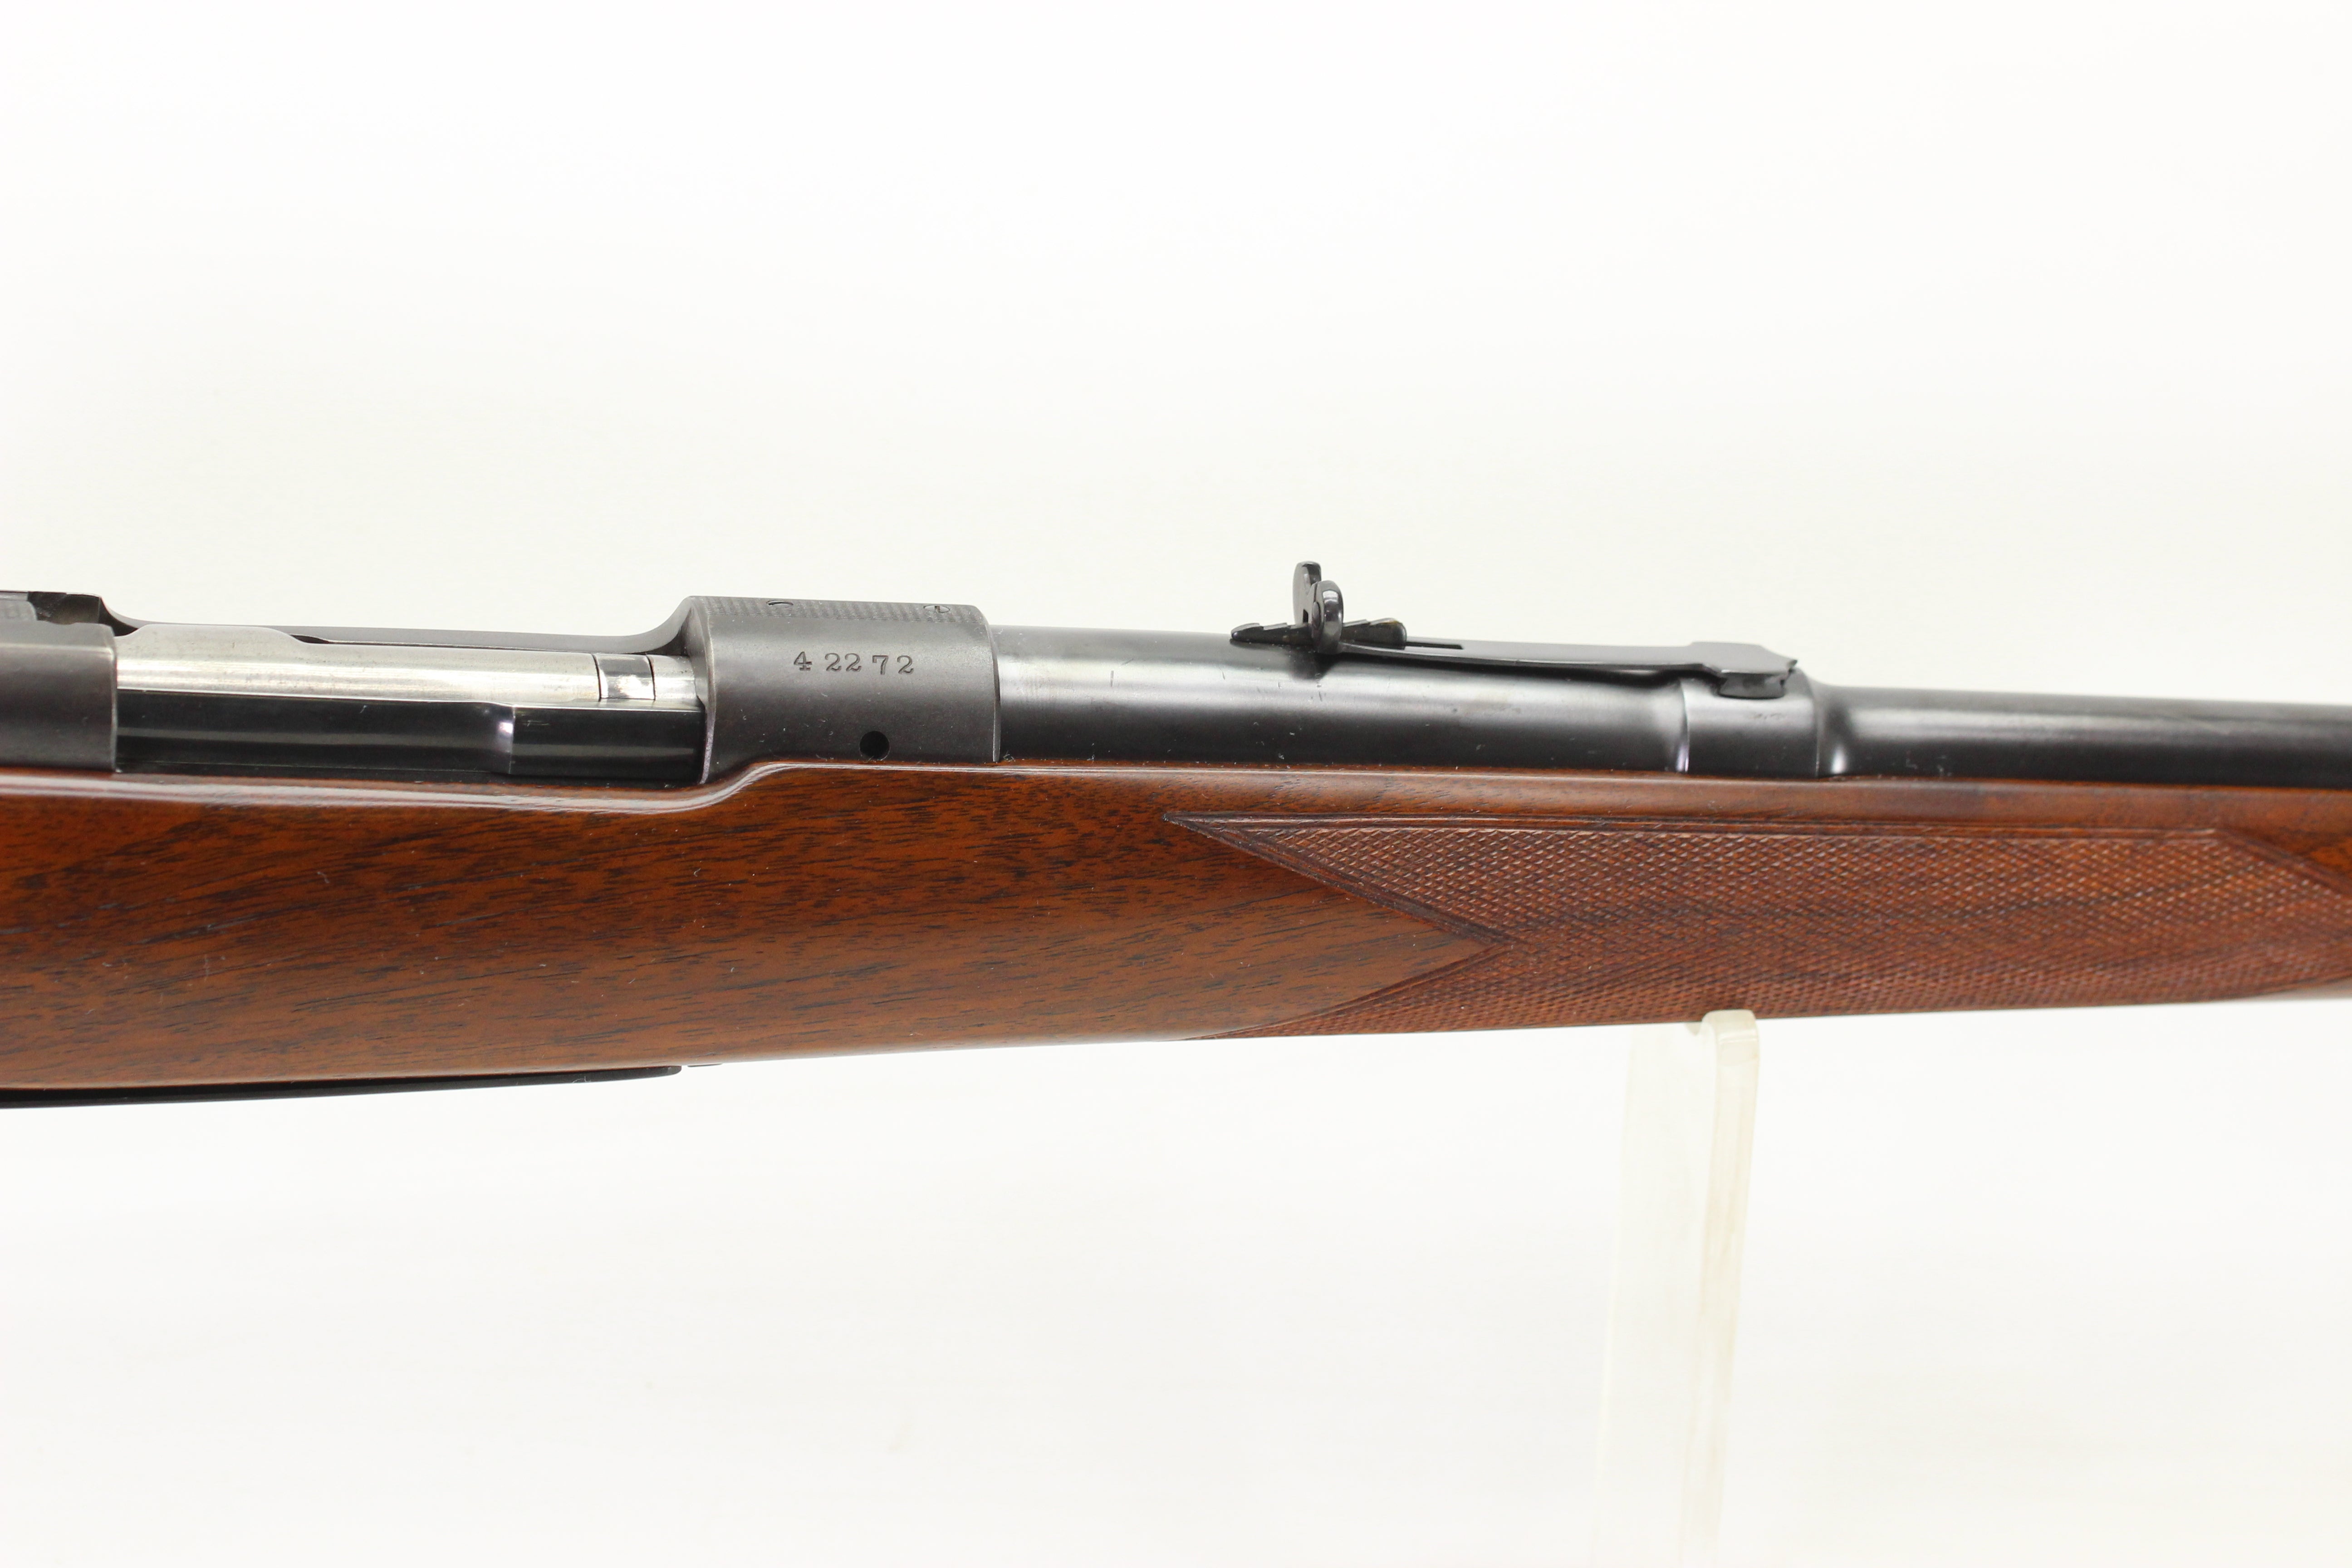 .30 Gov't 06 Standard Rifle - 1942